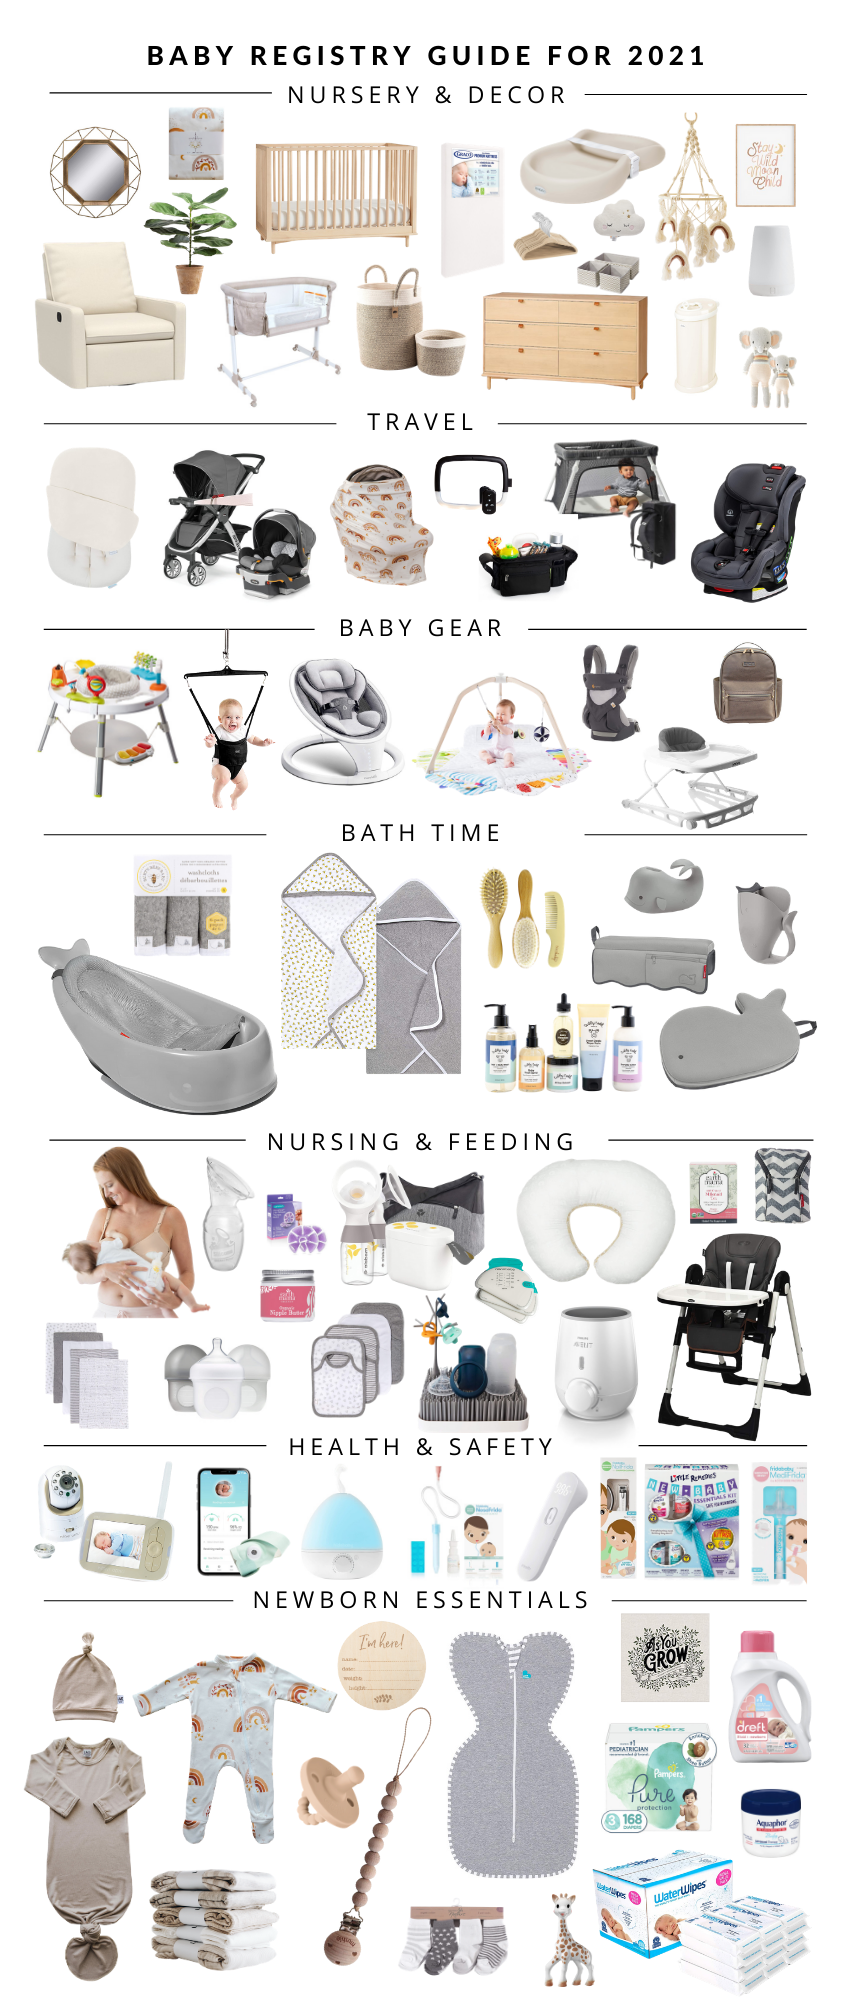 Baby Registry Guide for 2021 Nursery & decor